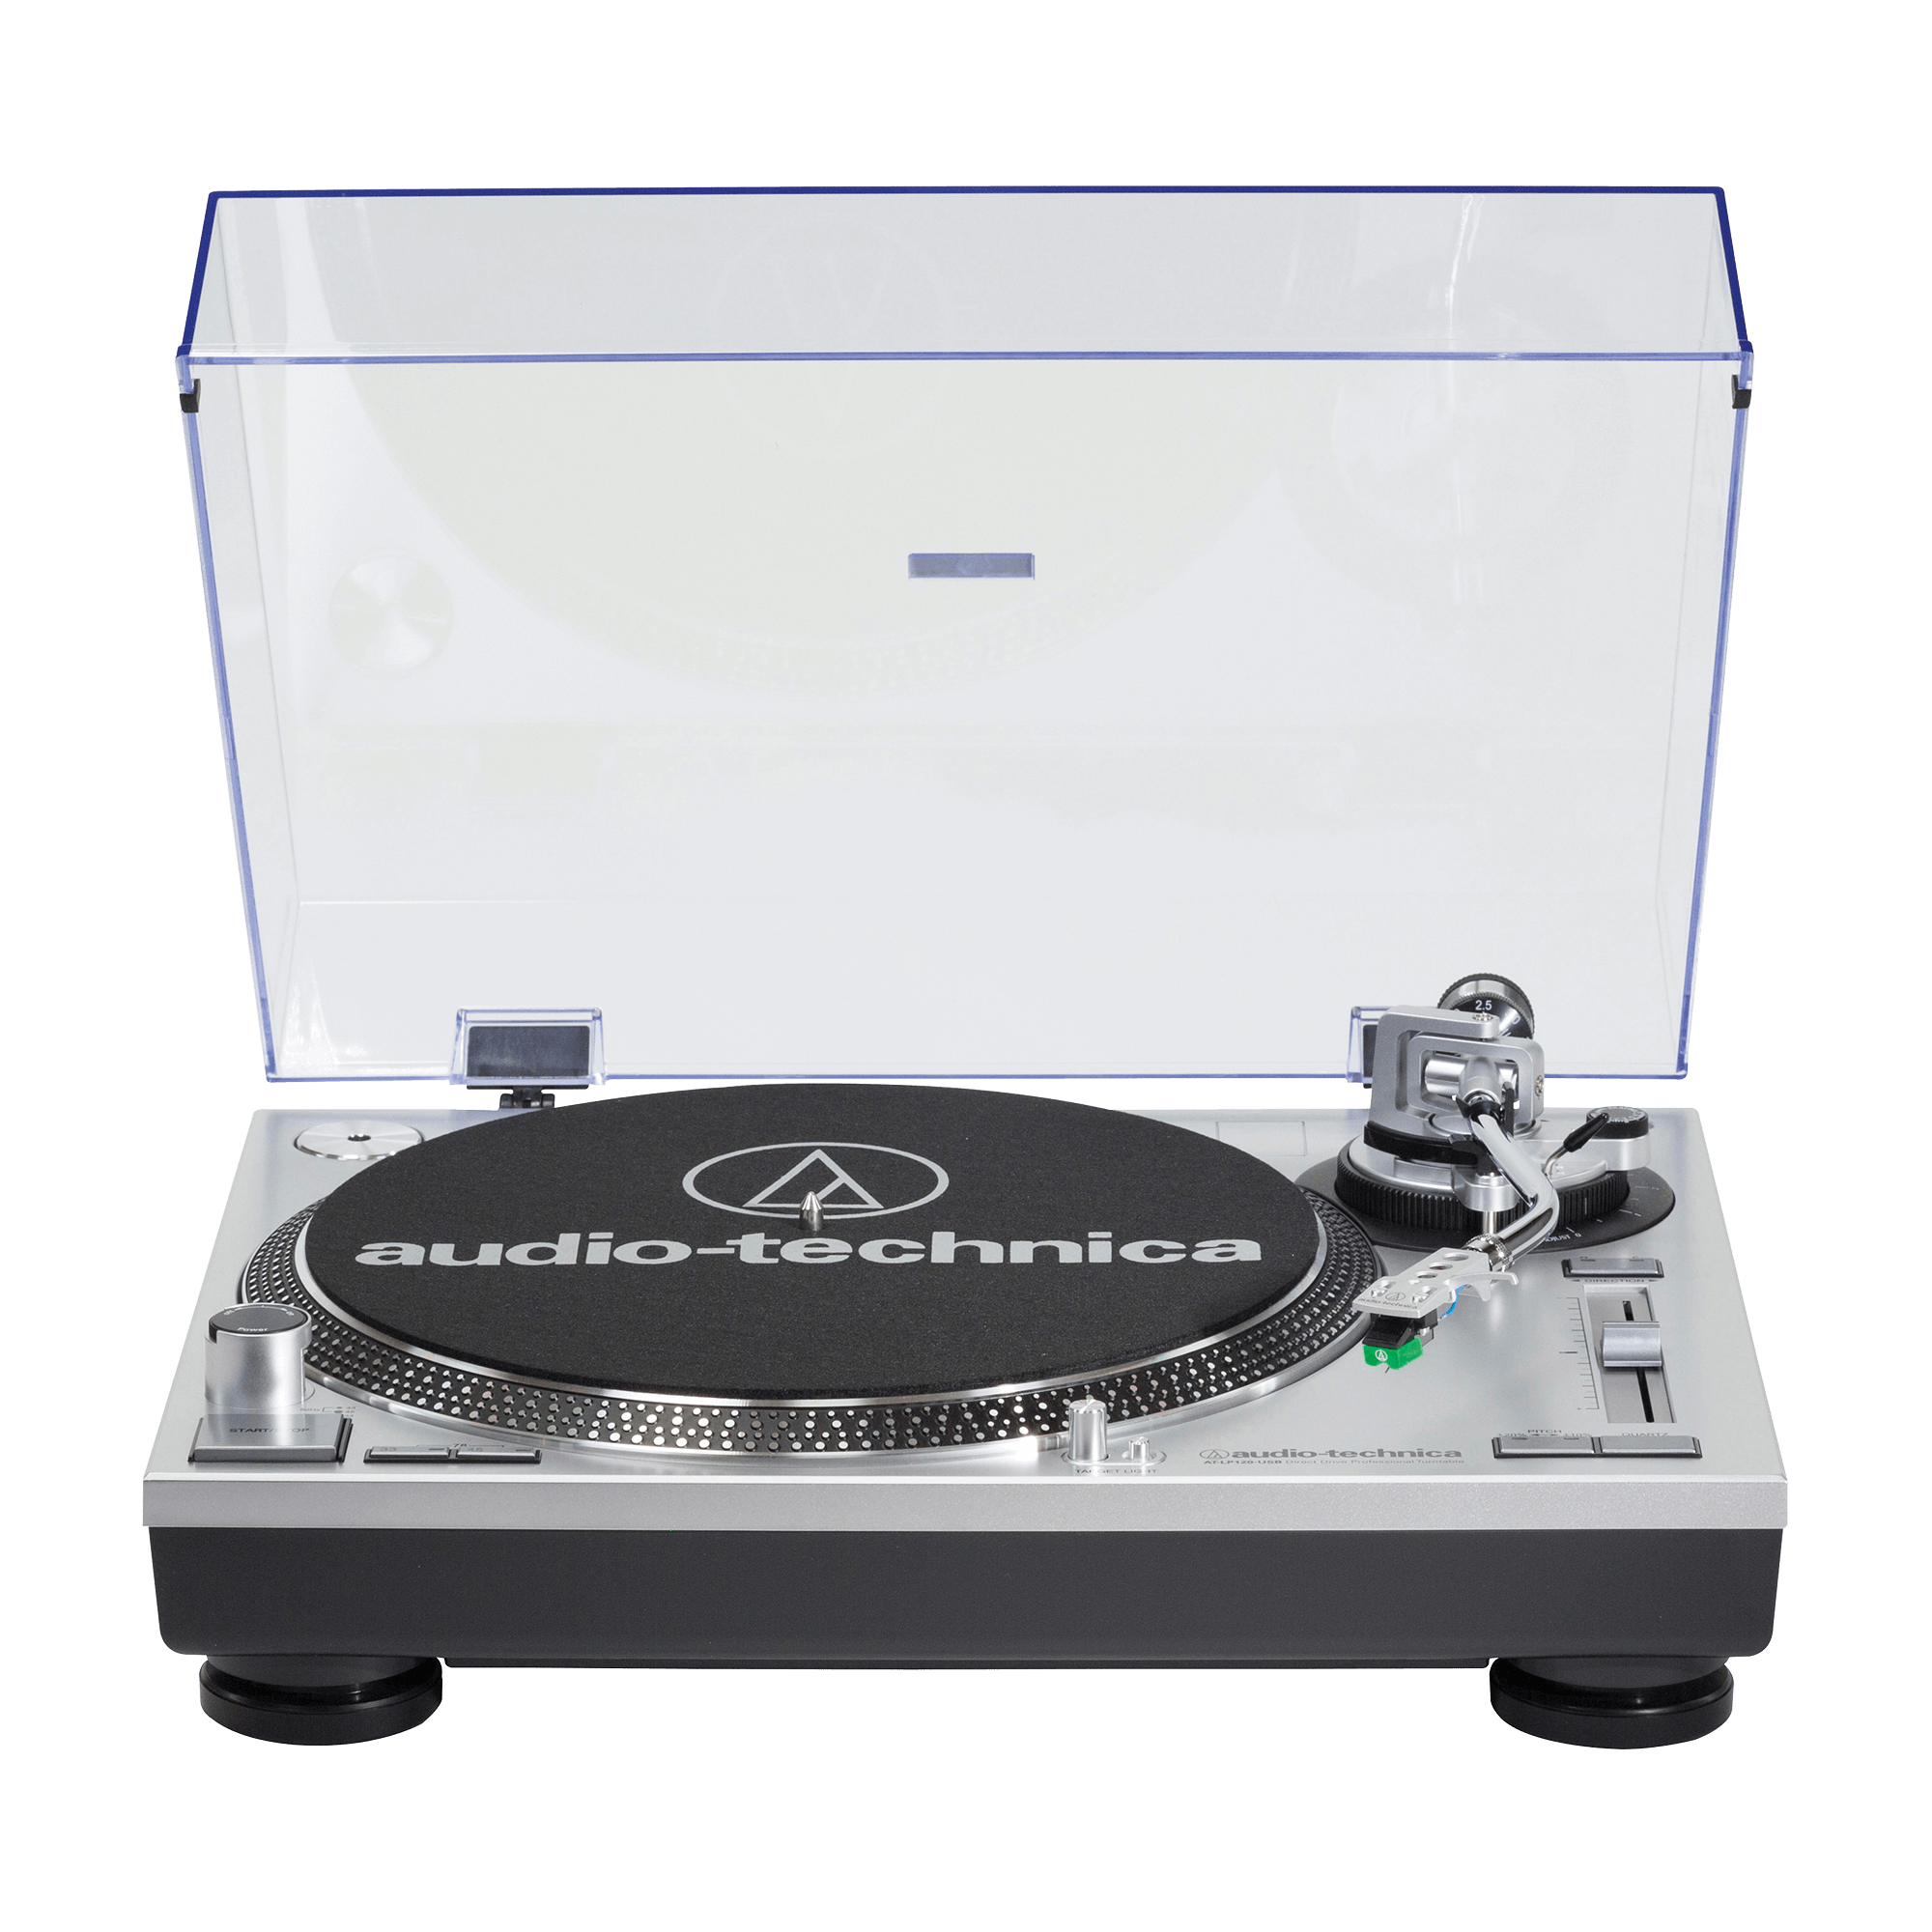  Audio-Technica AT-LP120XUSB-BK Direct-Drive Turntable (Analog &  USB), Fully Manual, Hi-Fi, 3 Speed, Convert Vinyl to Digital, Anti-Skate  and Variable Pitch Control Black : AUDIO-TECHNICA: Electronics